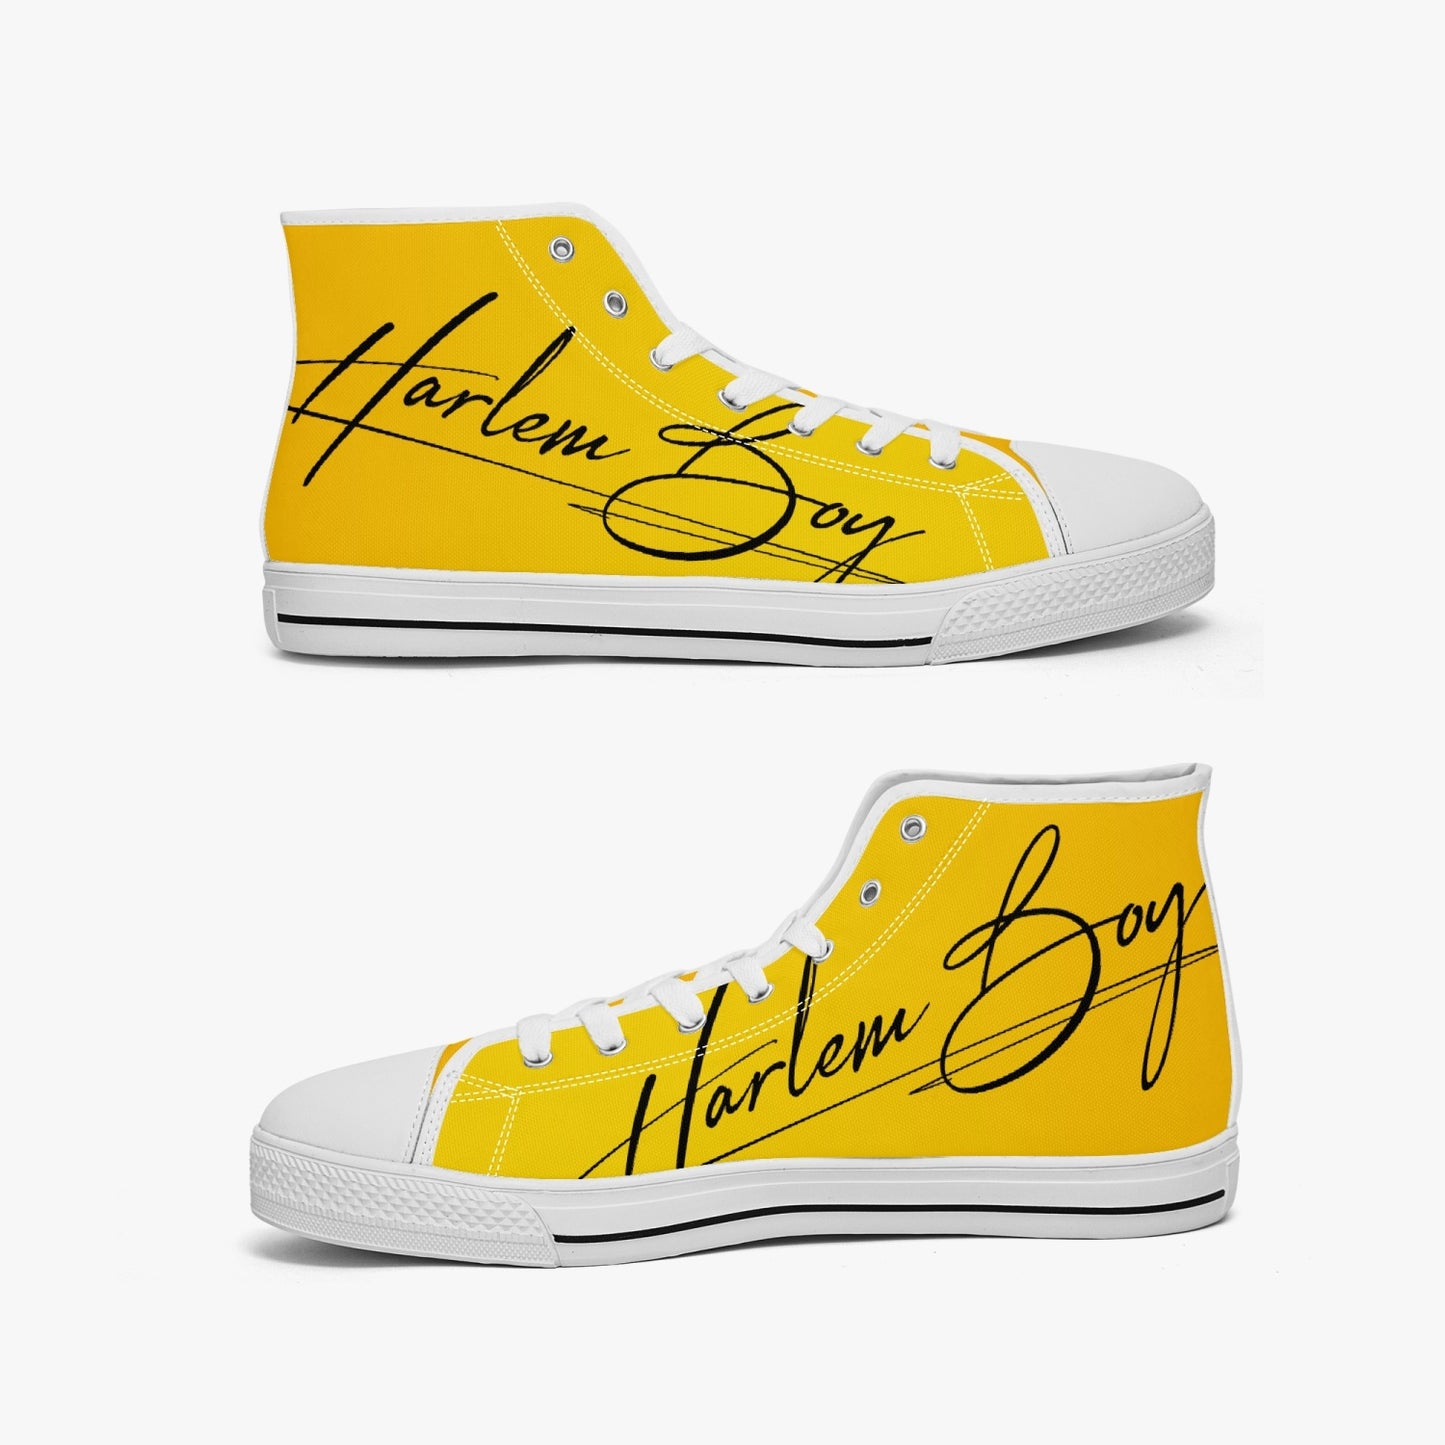 HB Harlem Boy "Lenox Ave" Classic High Top - Gold - Men (Black or White Soles)